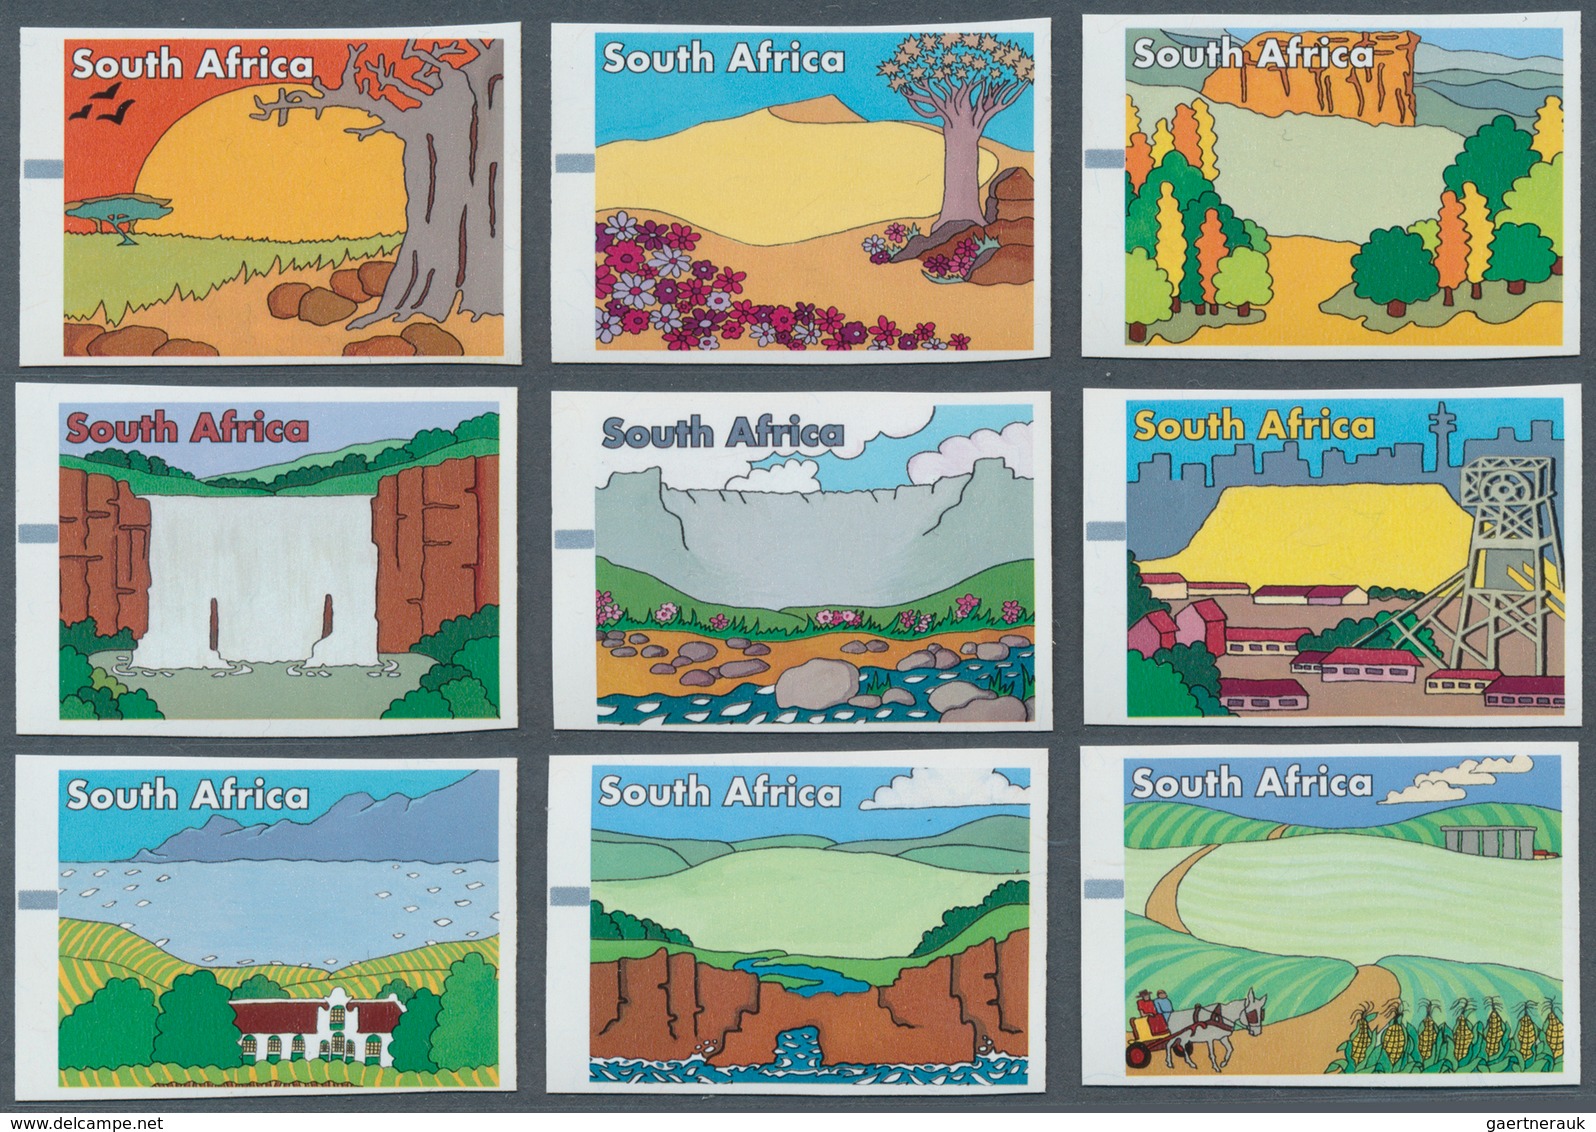 12491 Südafrika - Automatenmarken: 1998, Pictorials, Set Of All Nine Designs "without Value", Unmounted Mi - Vignettes D'affranchissement (Frama)